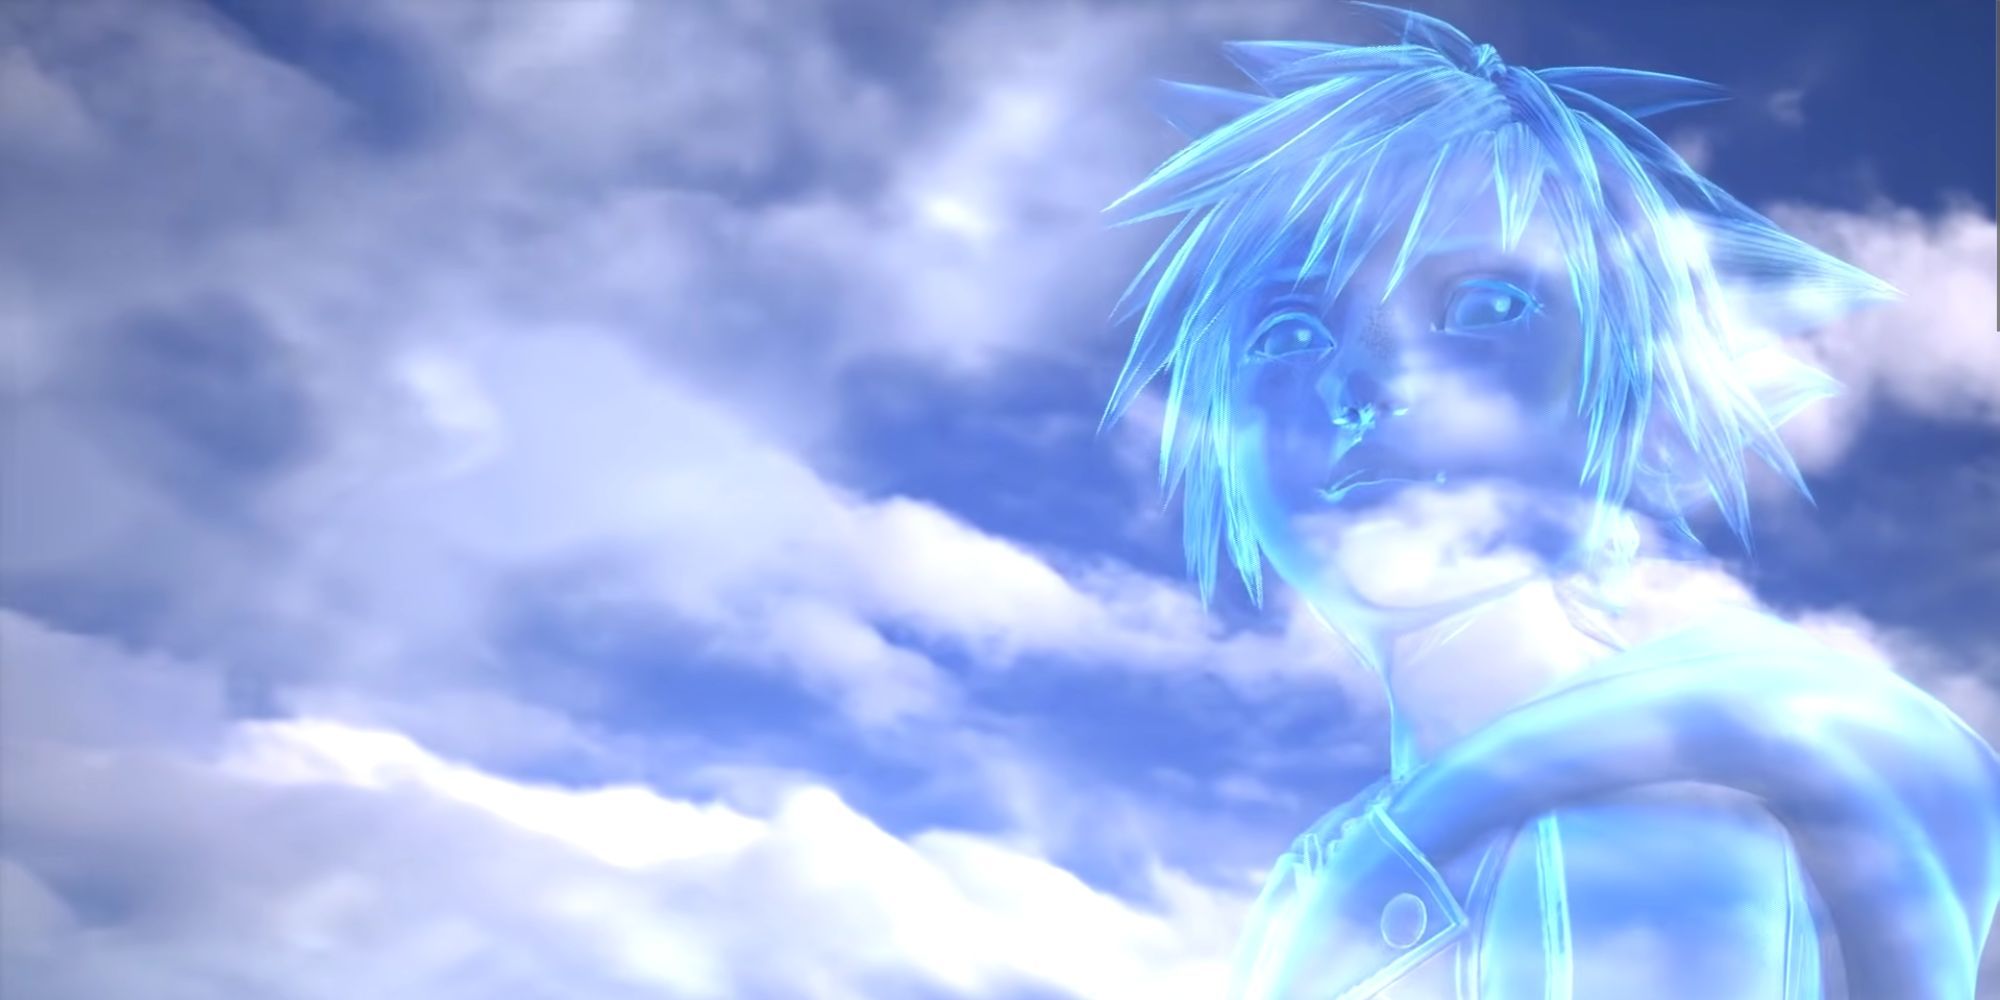 Sora in the Final World in Kingdom Hearts 3.